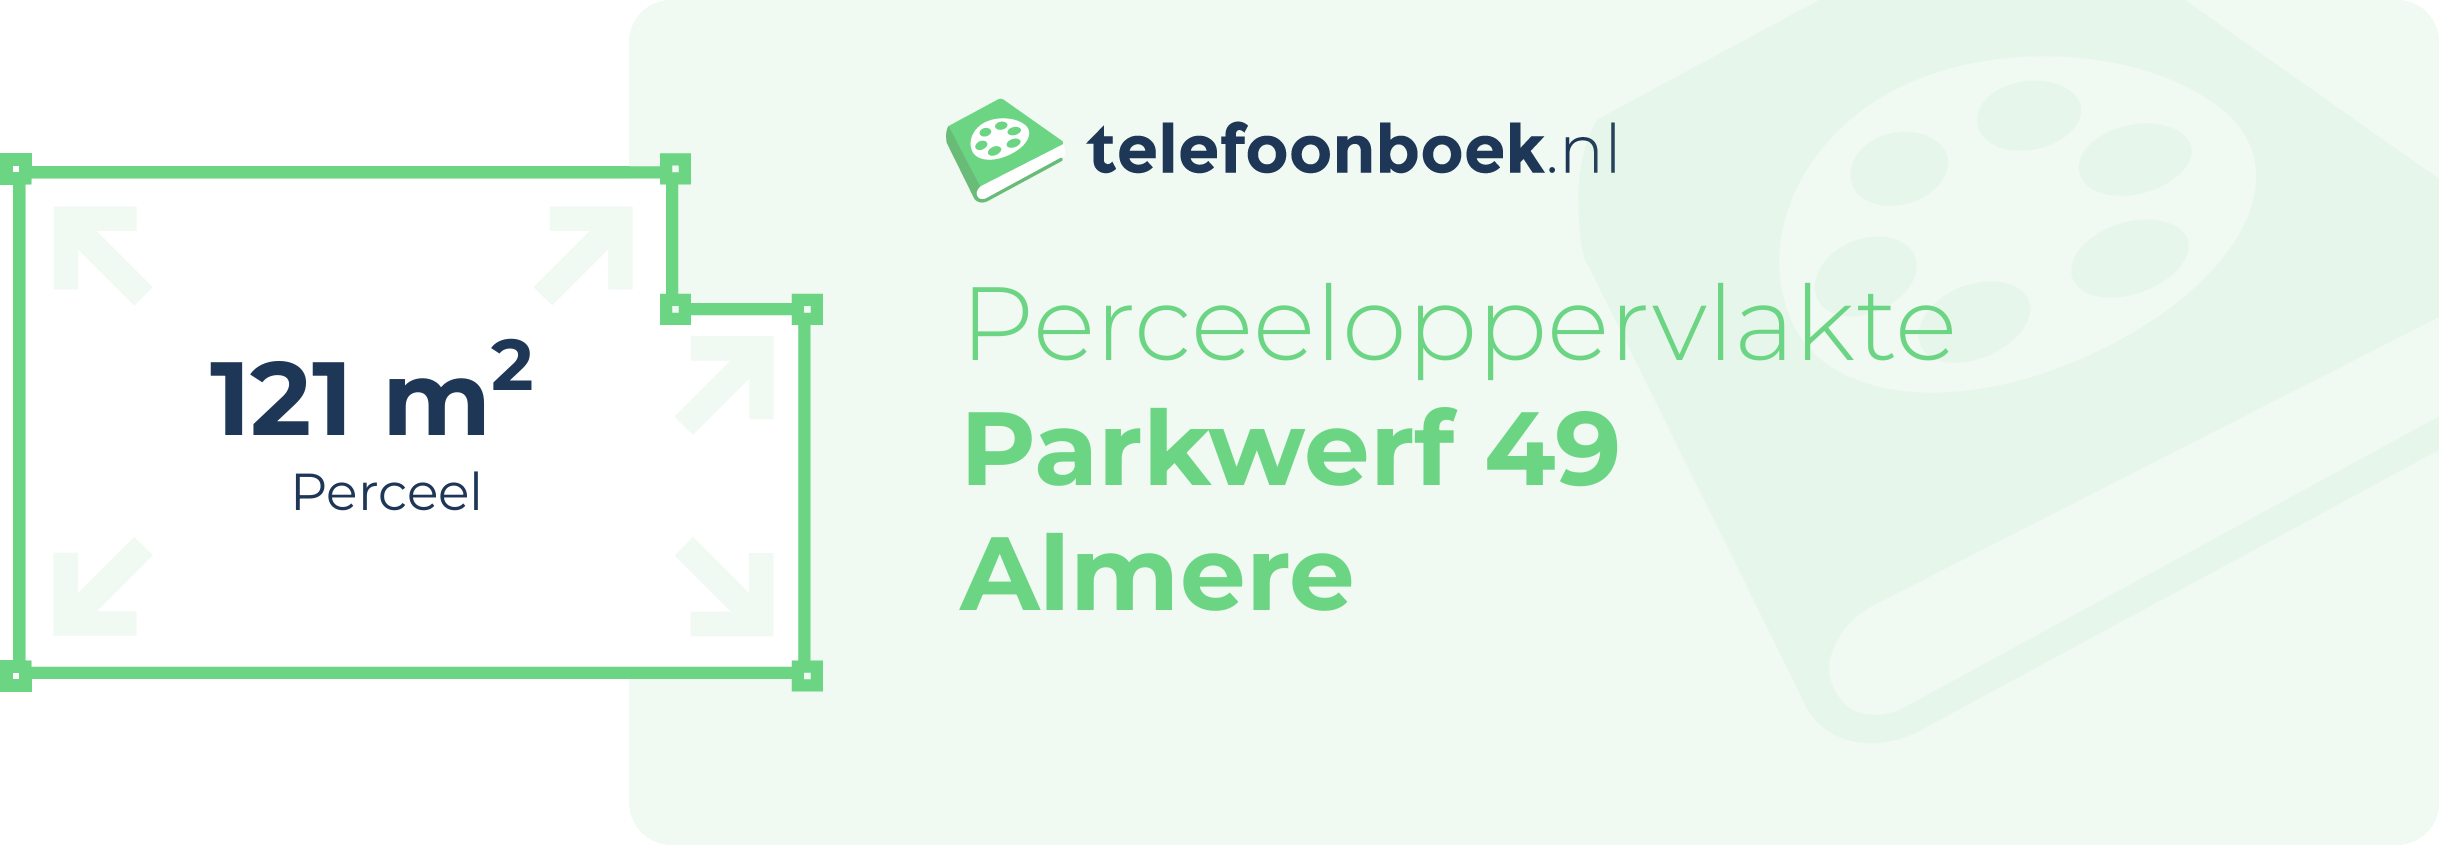 Perceeloppervlakte Parkwerf 49 Almere